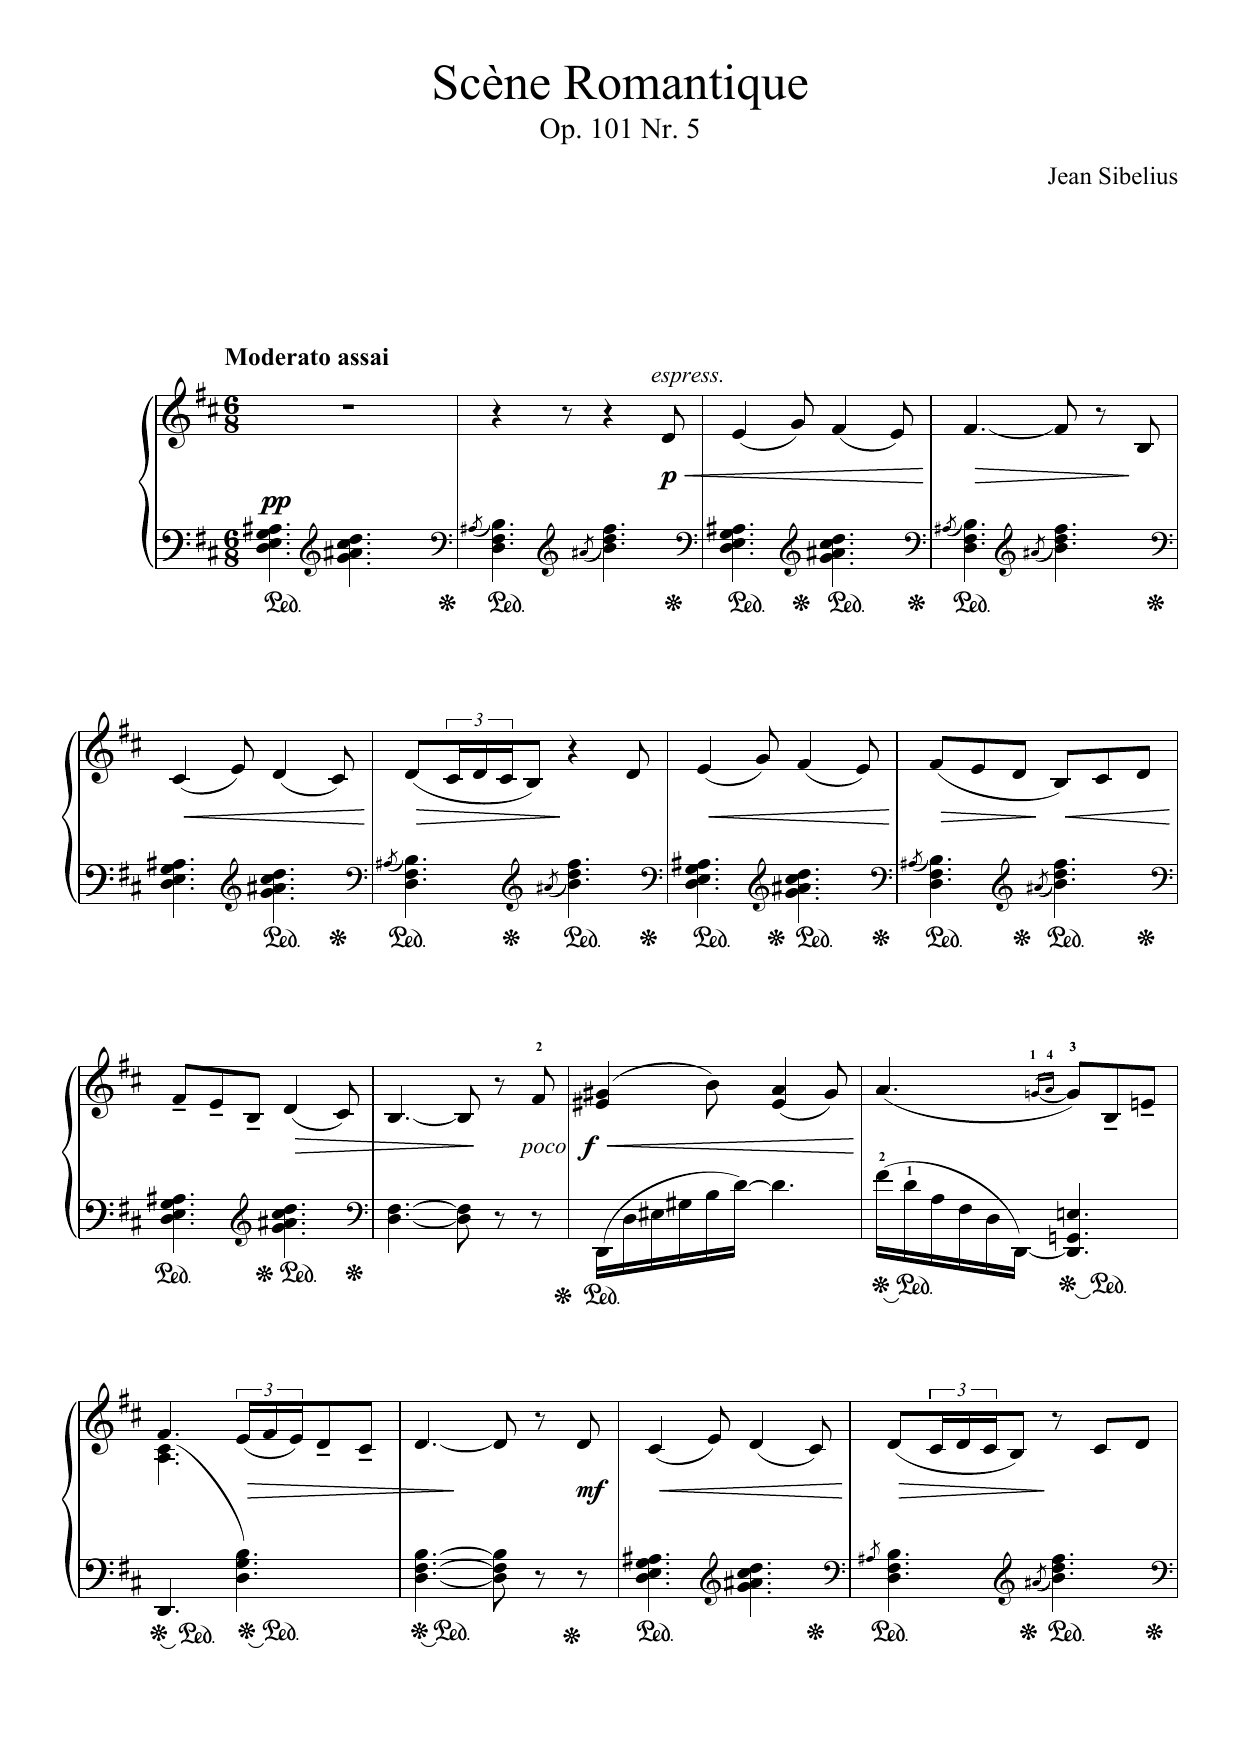 Download Jean Sibelius 5 Morceaux Romantiques, Op.101 - V. Scène Romantique Sheet Music and learn how to play Piano PDF digital score in minutes